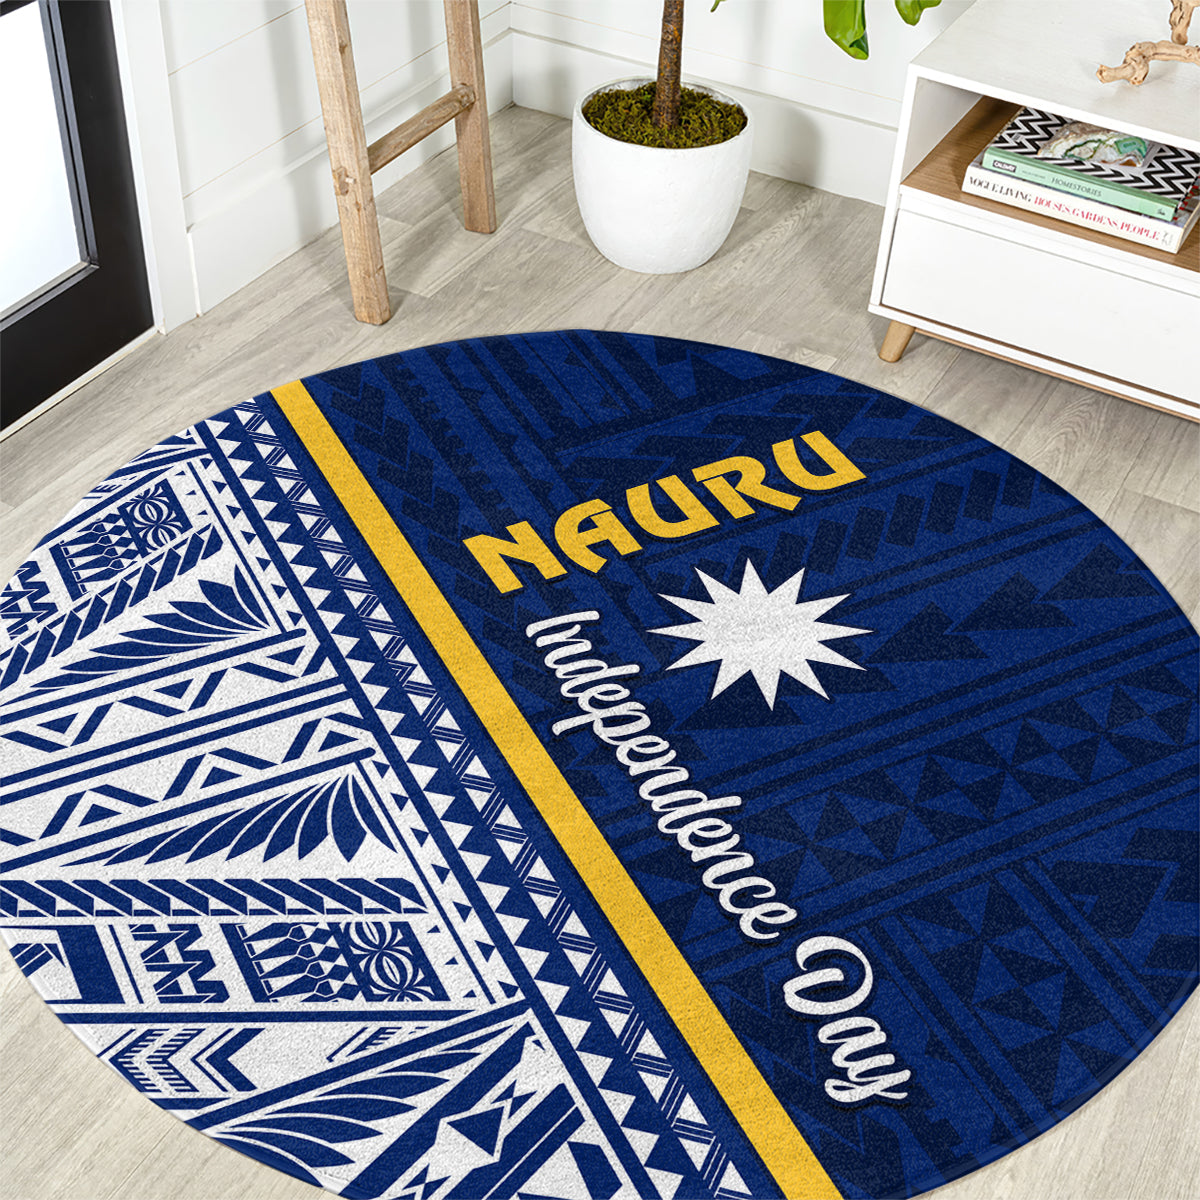 Nauru Independence Day Round Carpet Repubrikin Naoero Gods Will First LT01 Blue - Polynesian Pride